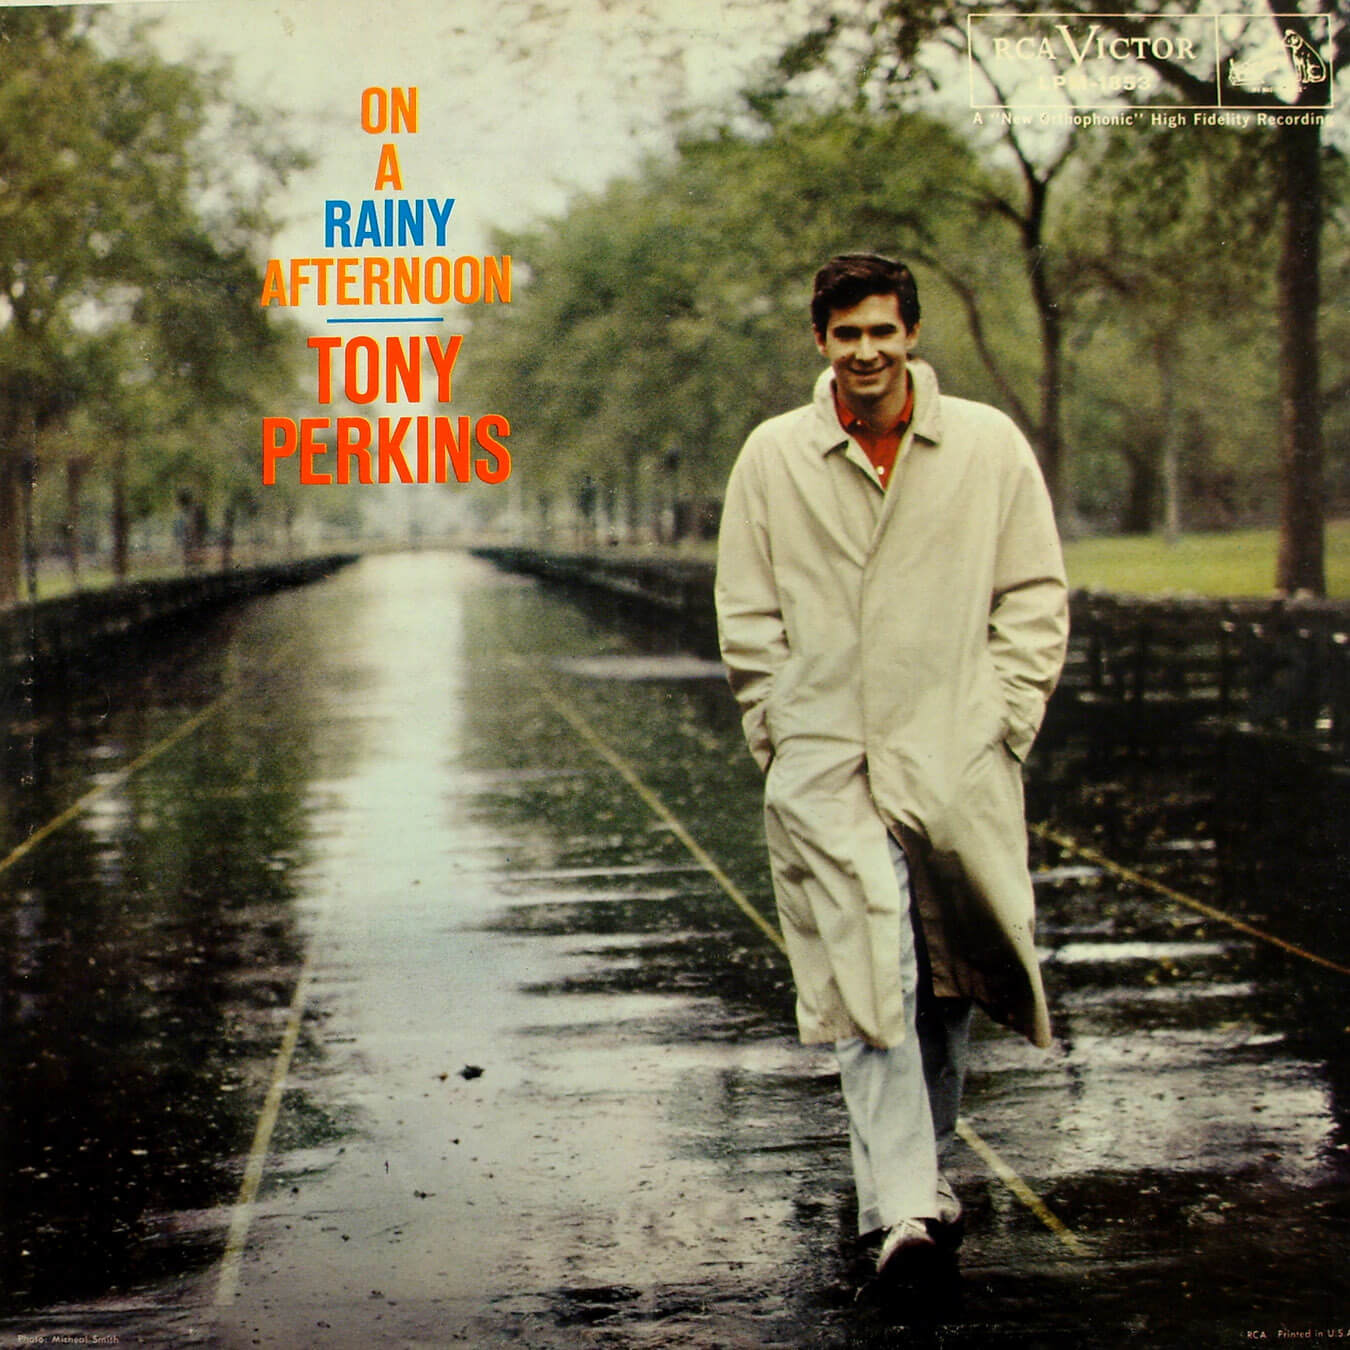 tony-perkins-on-a-rainy-afternoon-front2